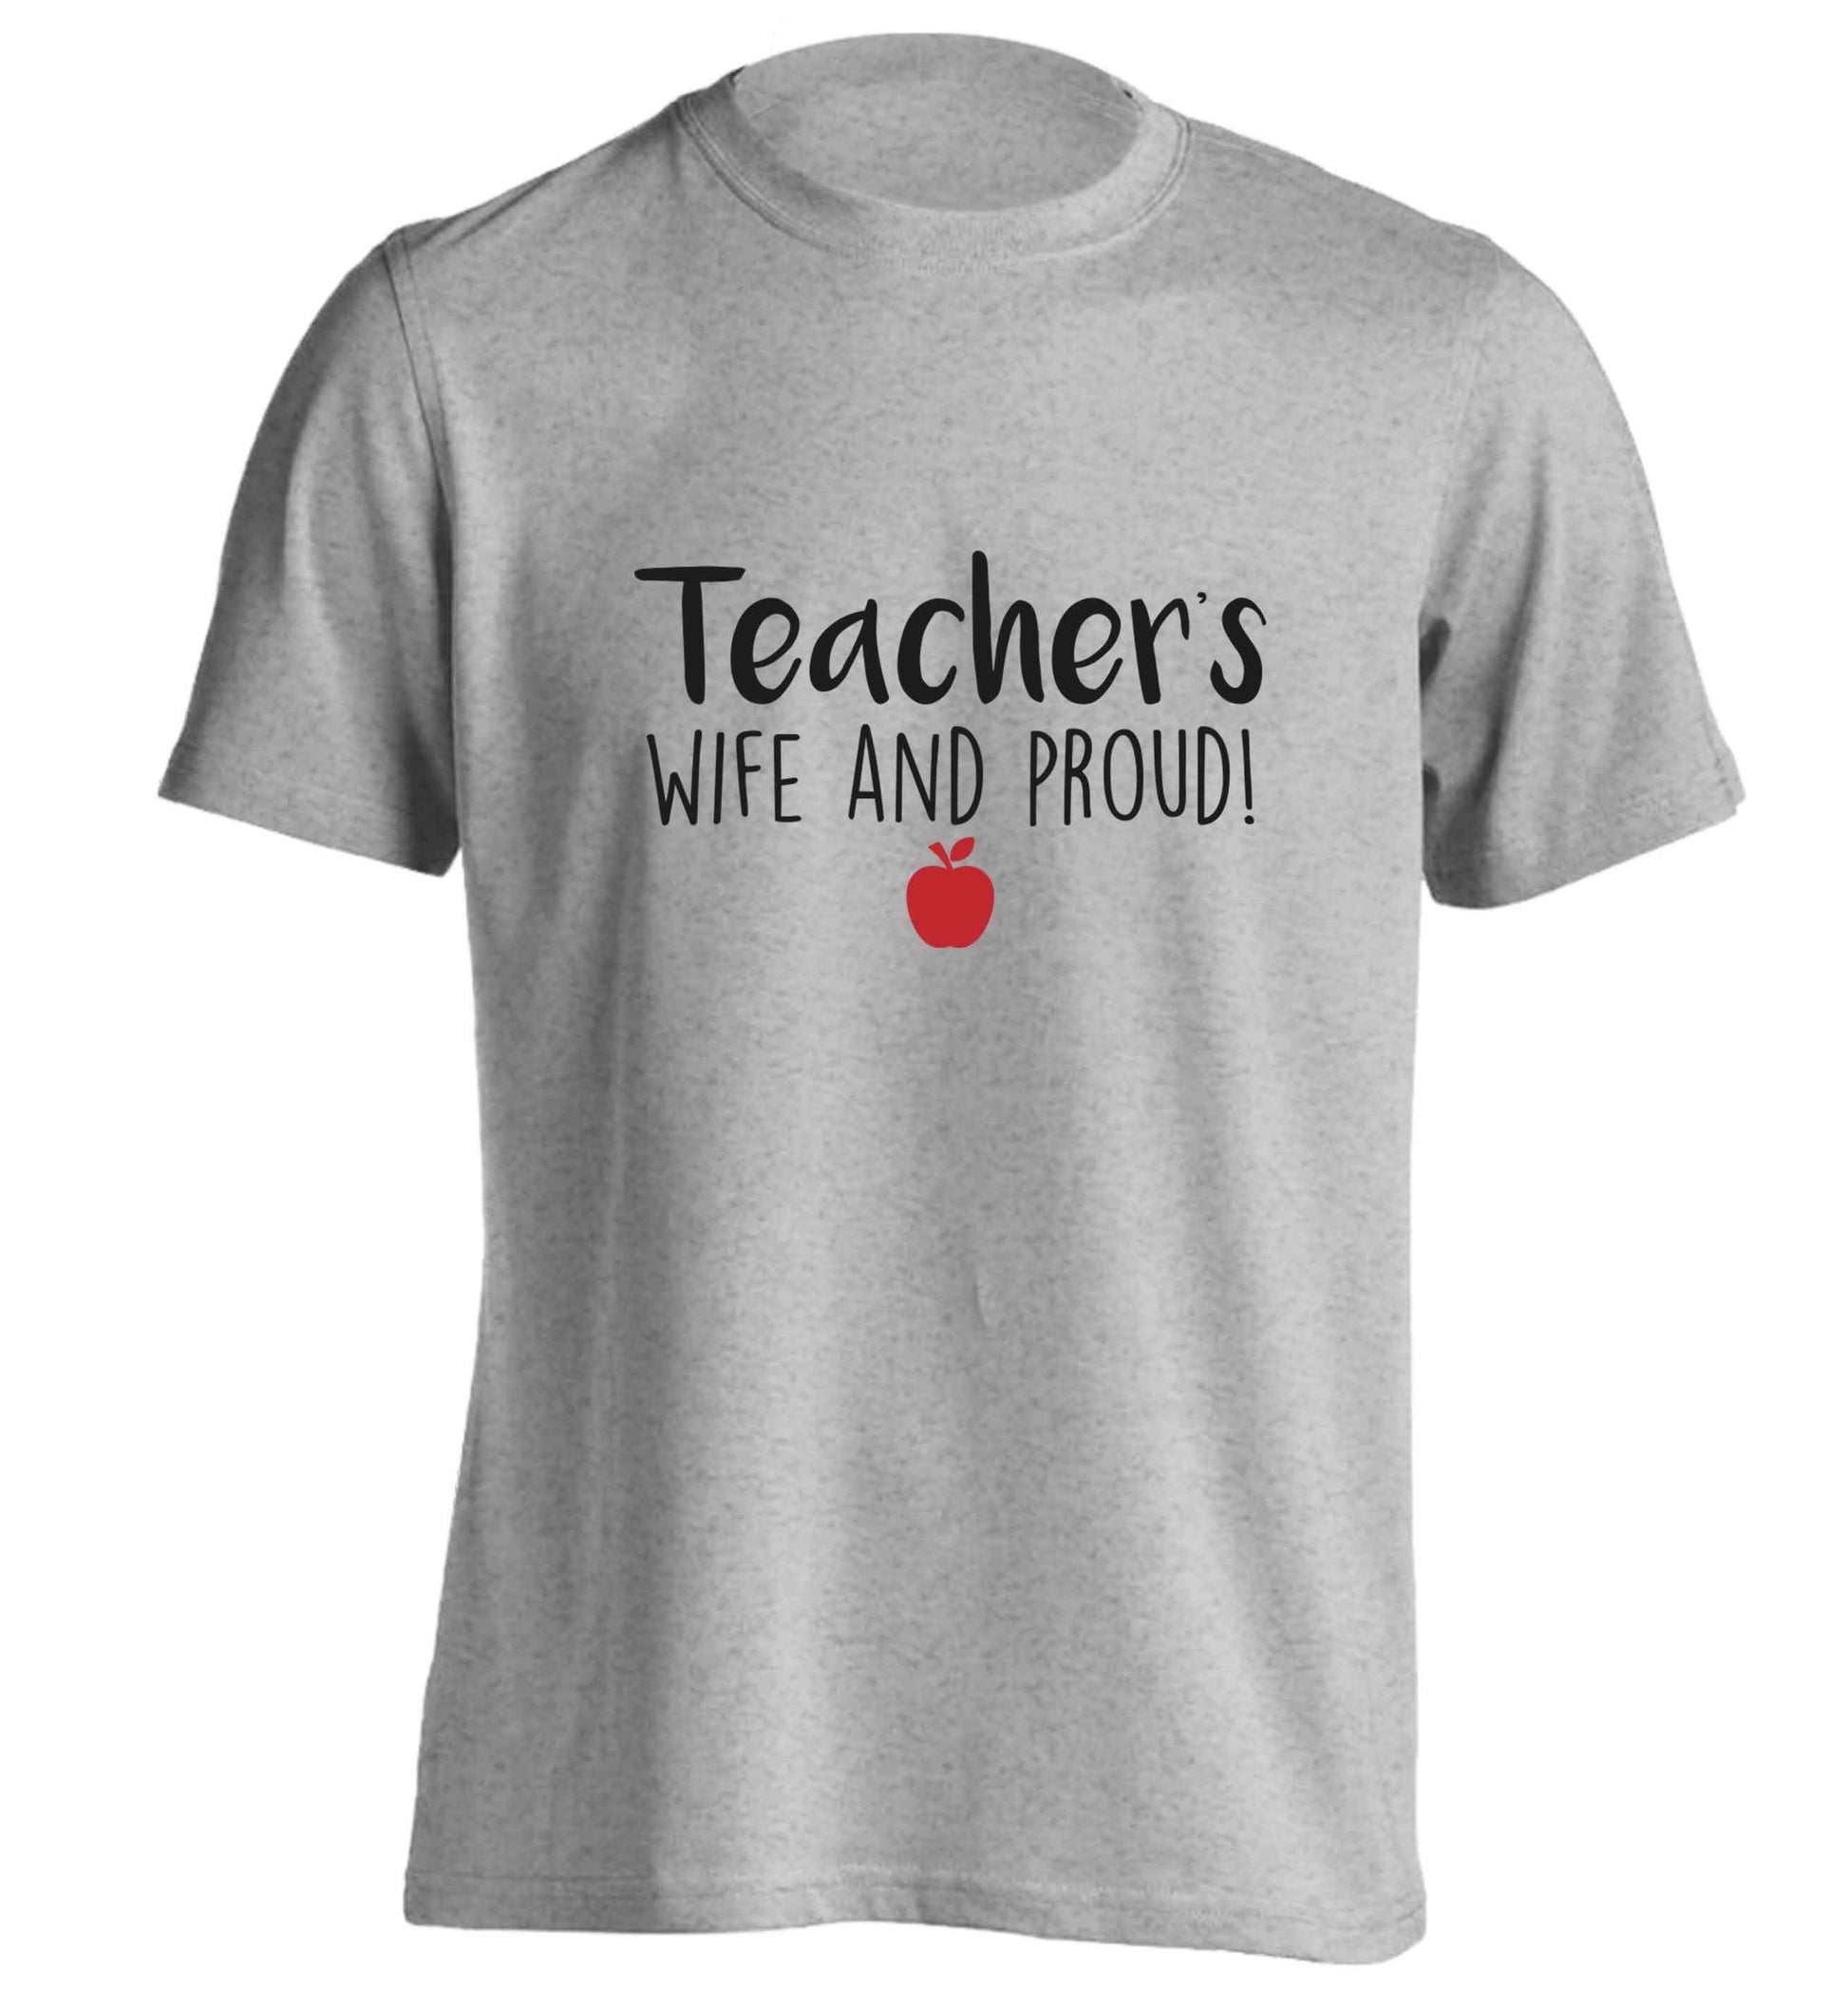 Teachers wife and proud adults unisex grey Tshirt 2XL